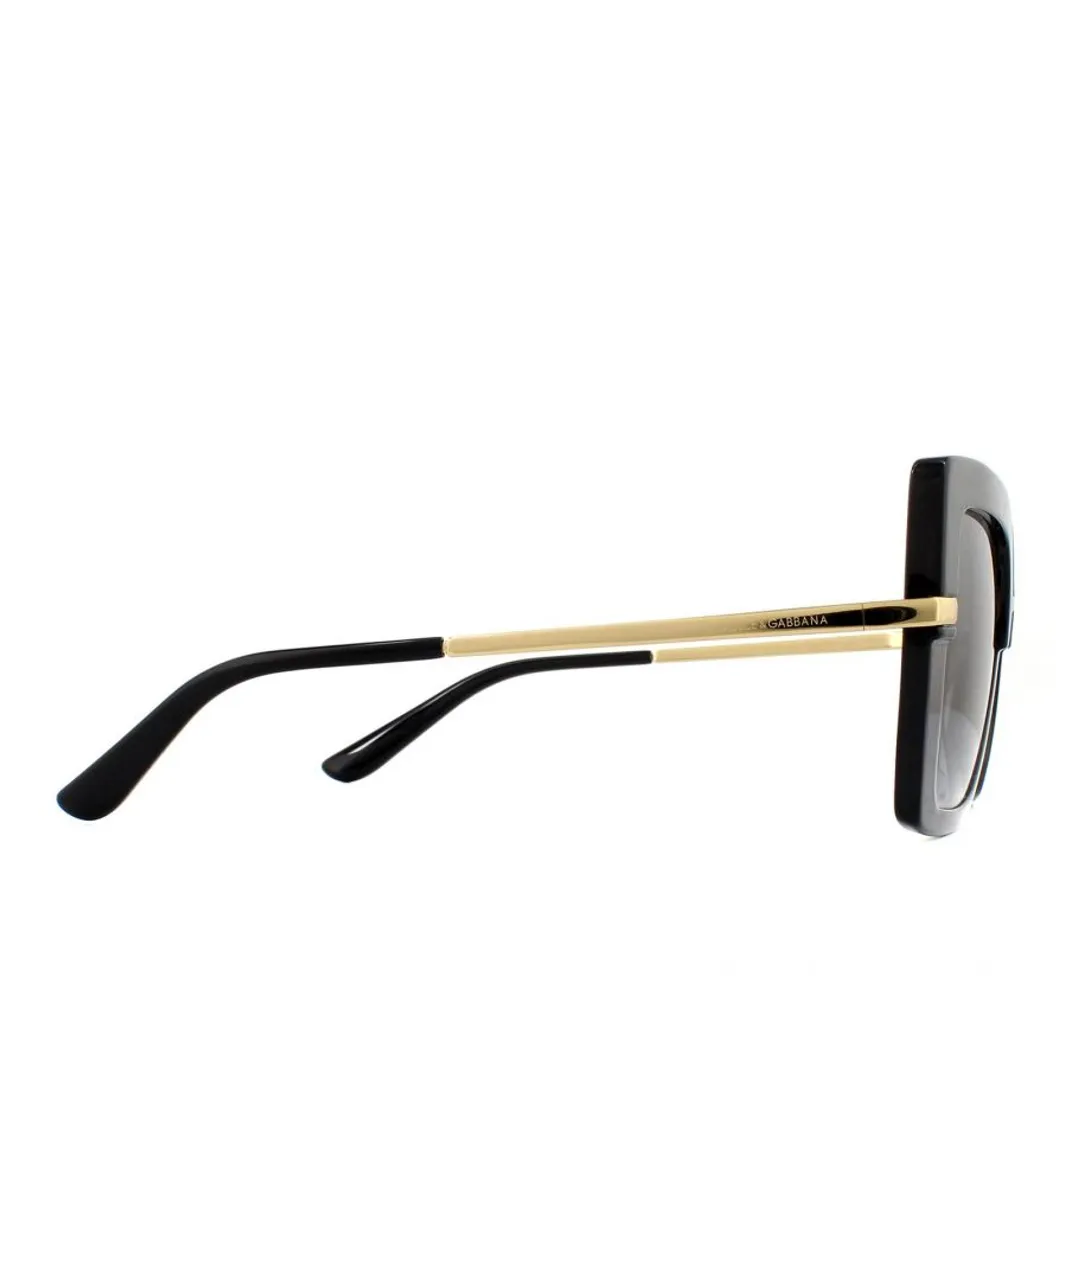 Dolce & Gabbana Womens Sunglasses DG4373 32468G Top Black on Transparent Grey Gradient Metal - One